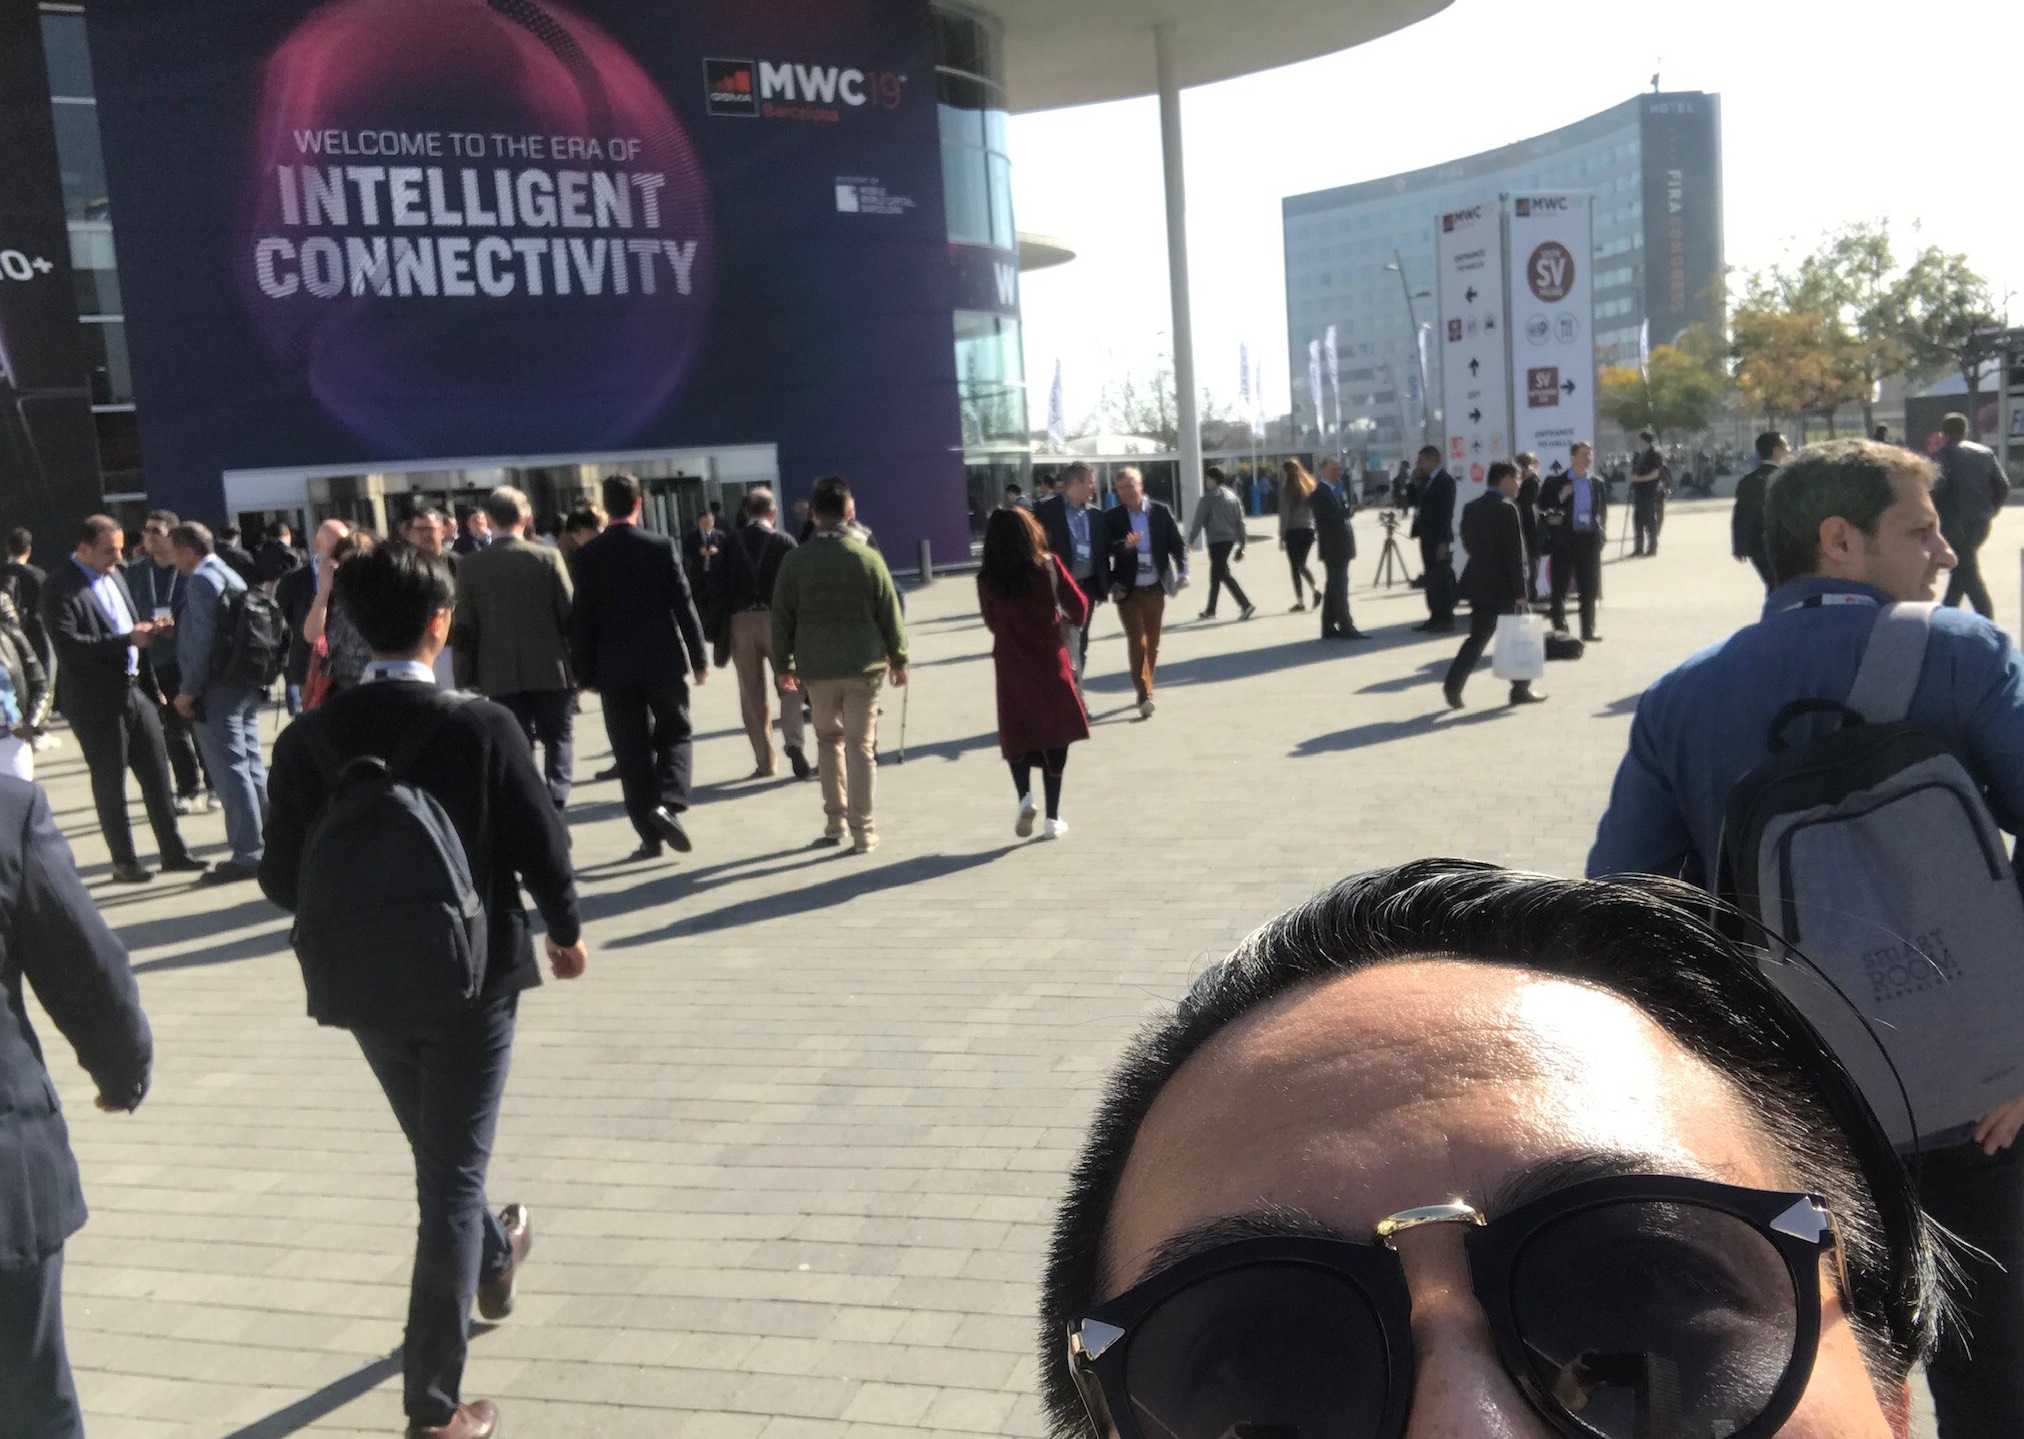 Mobile World Congress 2019 blog